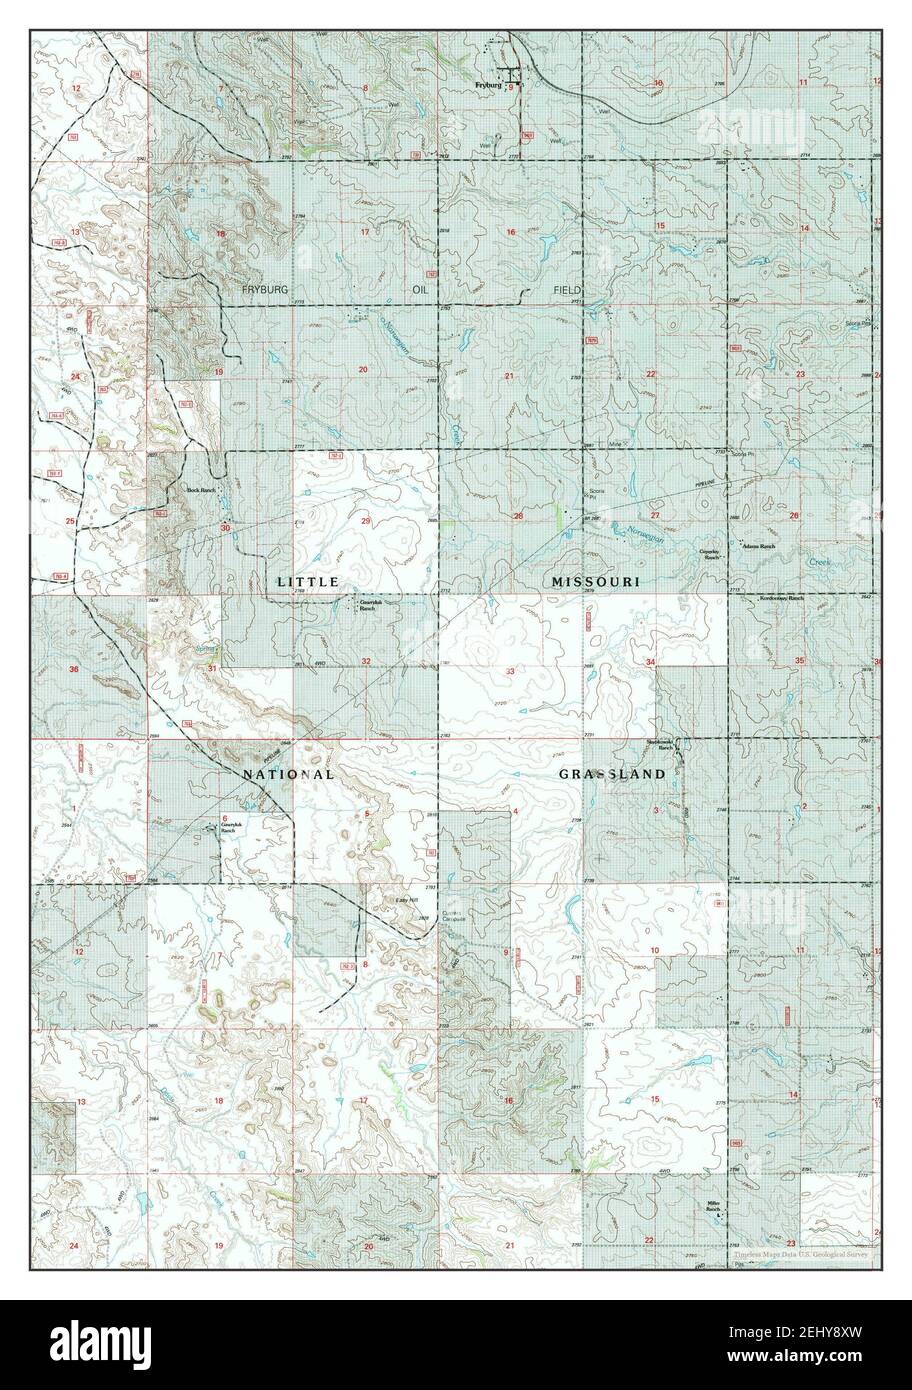 Fryburg, North Dakota, map 1997, 1:24000, United States of America by Timeless Maps, data U.S. Geological Survey Stock Photo